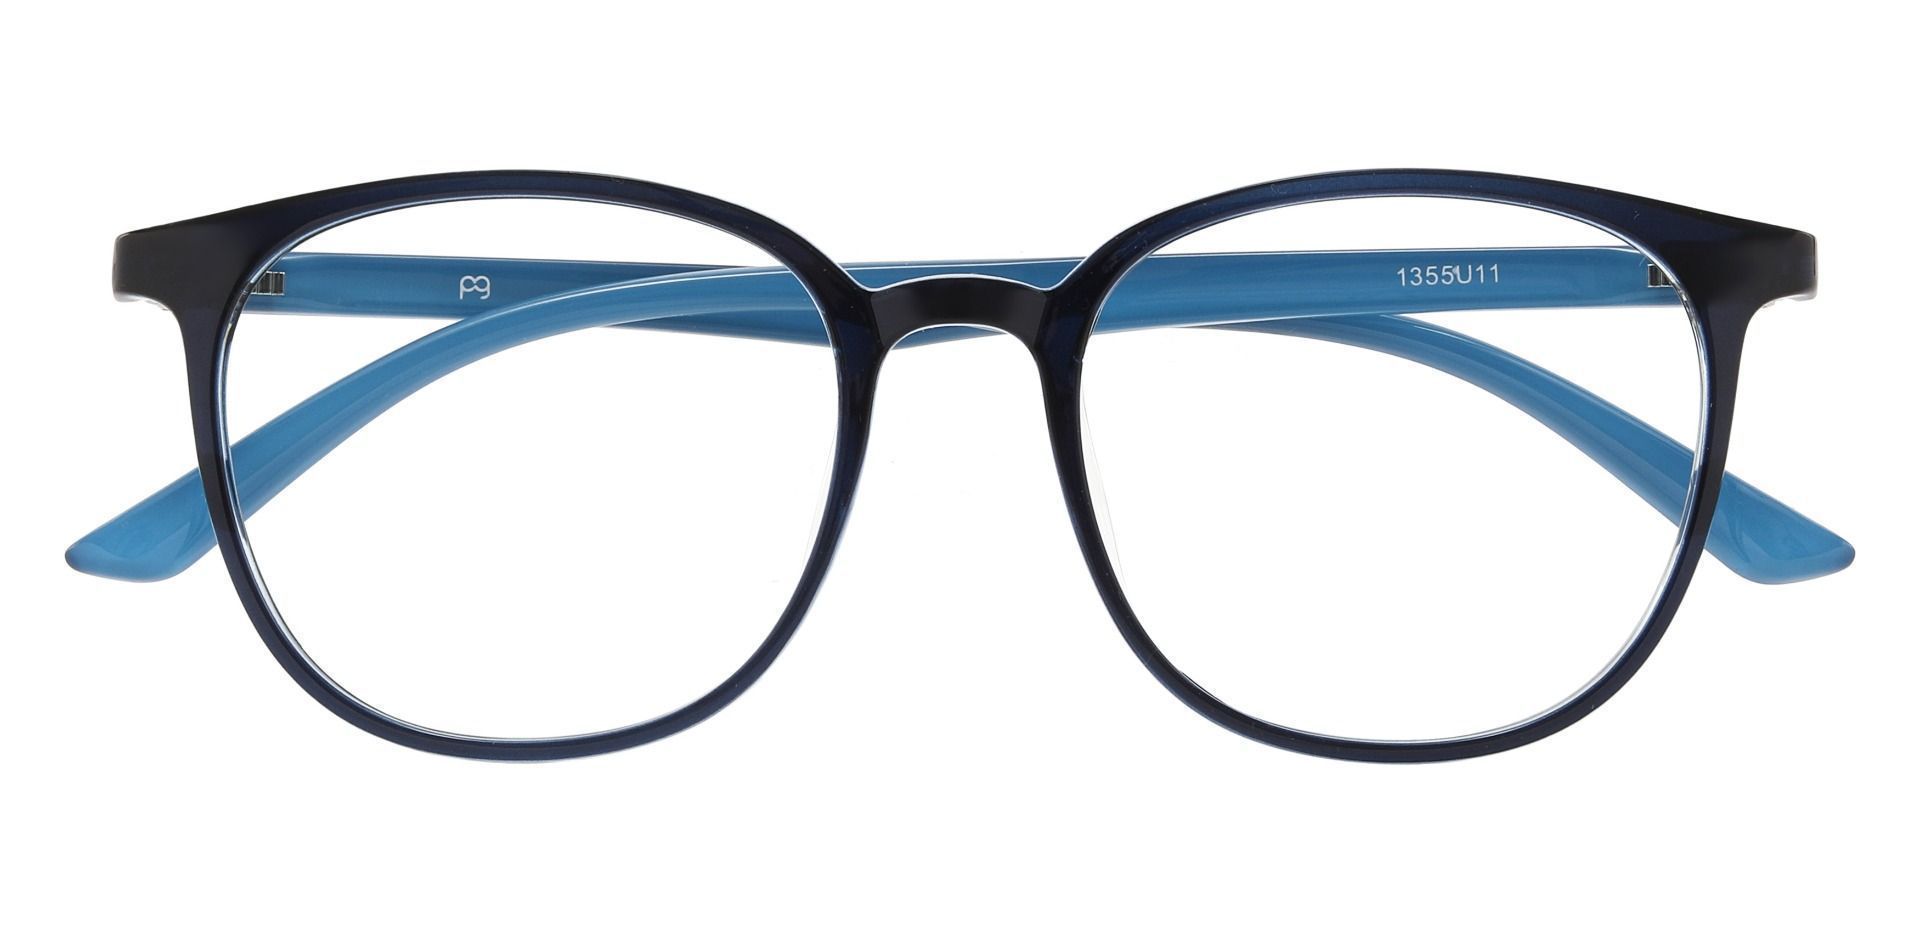 Kelso Square Reading Glasses - Blue